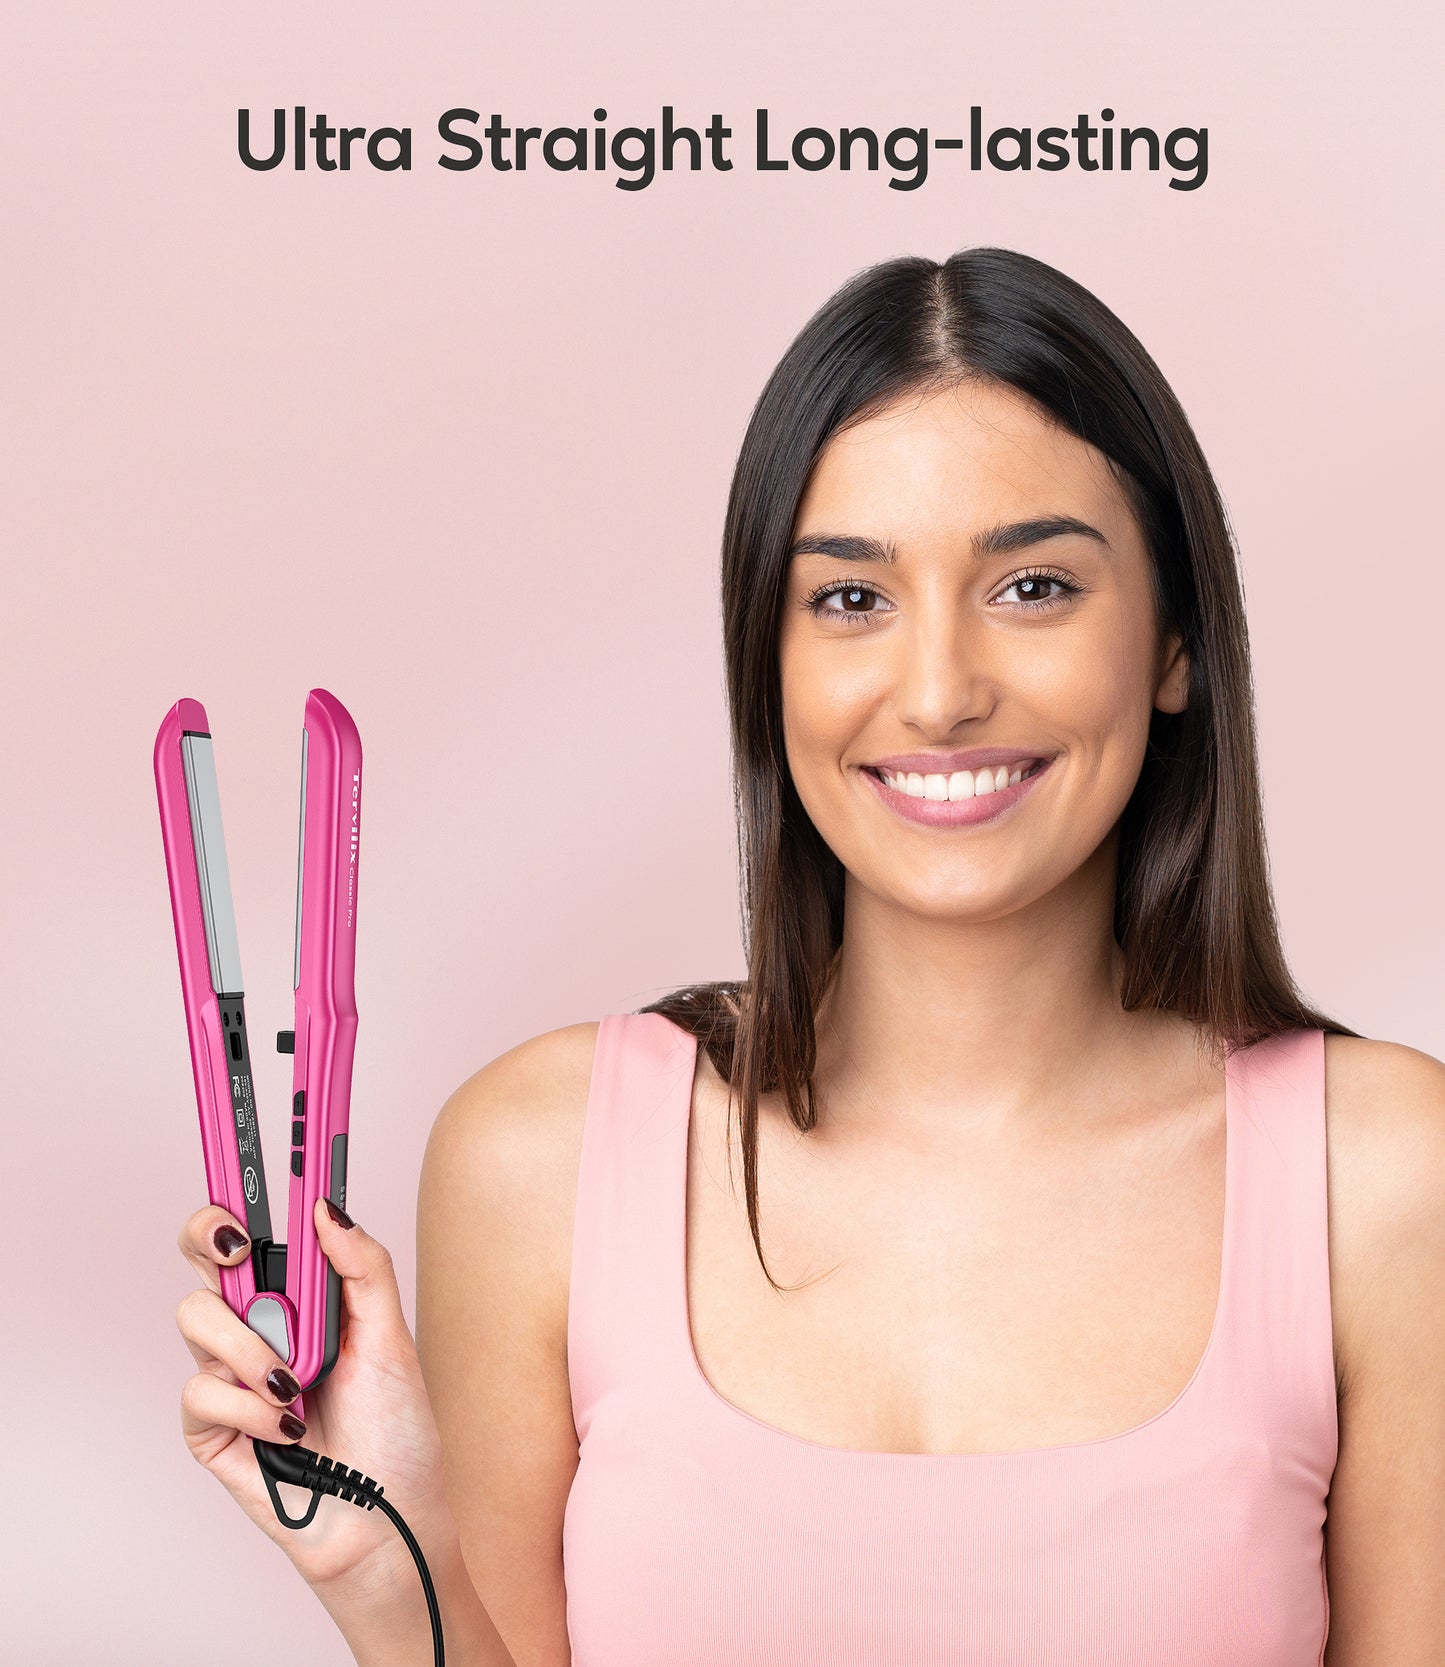 Terviiix 1''Classic Pro Hair Straightener, Pink